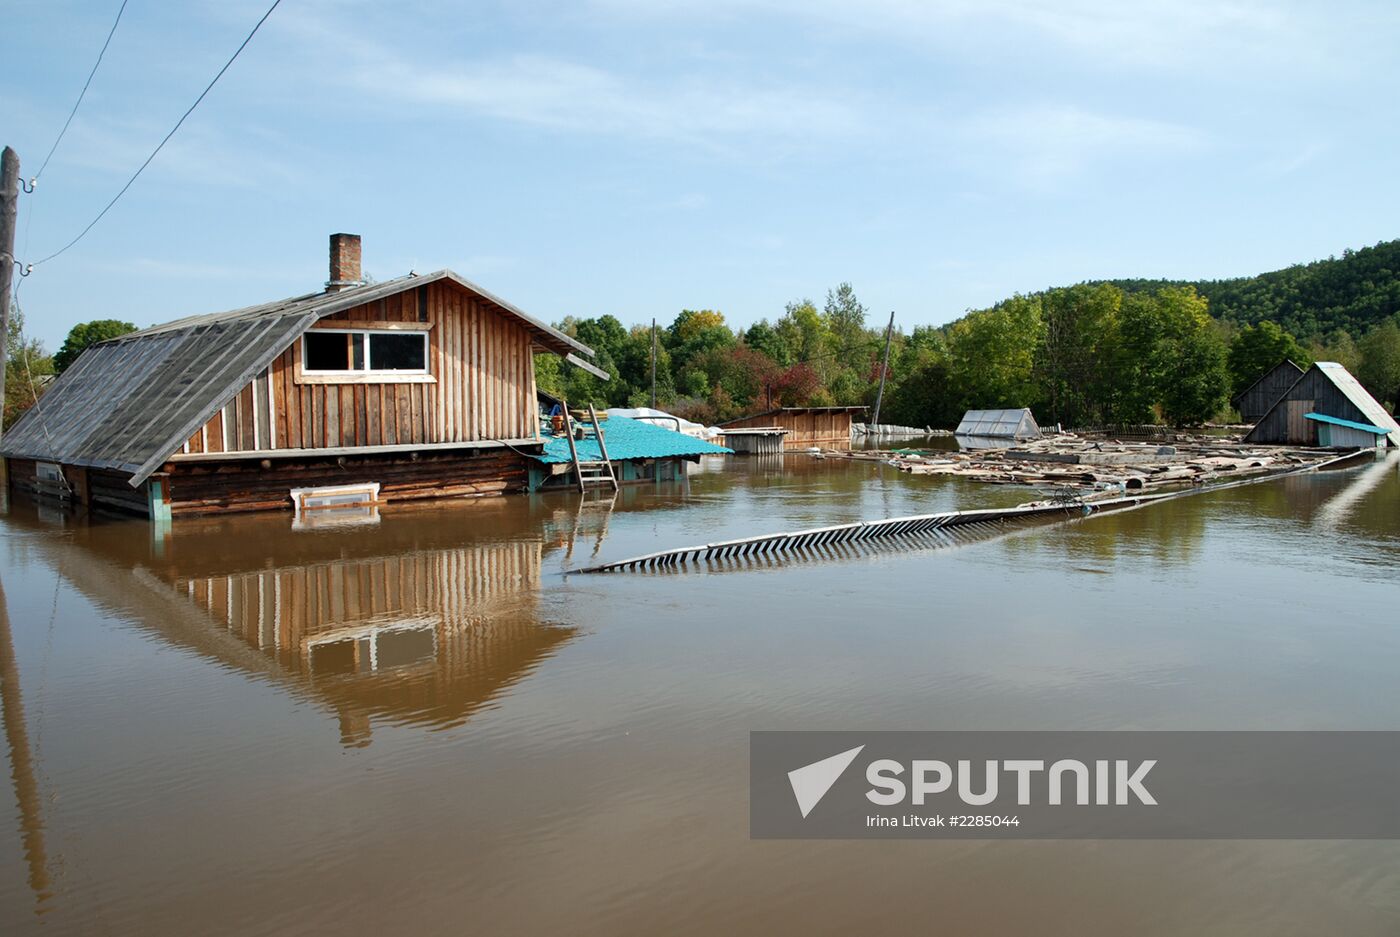 Flood in Komsomolsk region of Khabarovsk Territory